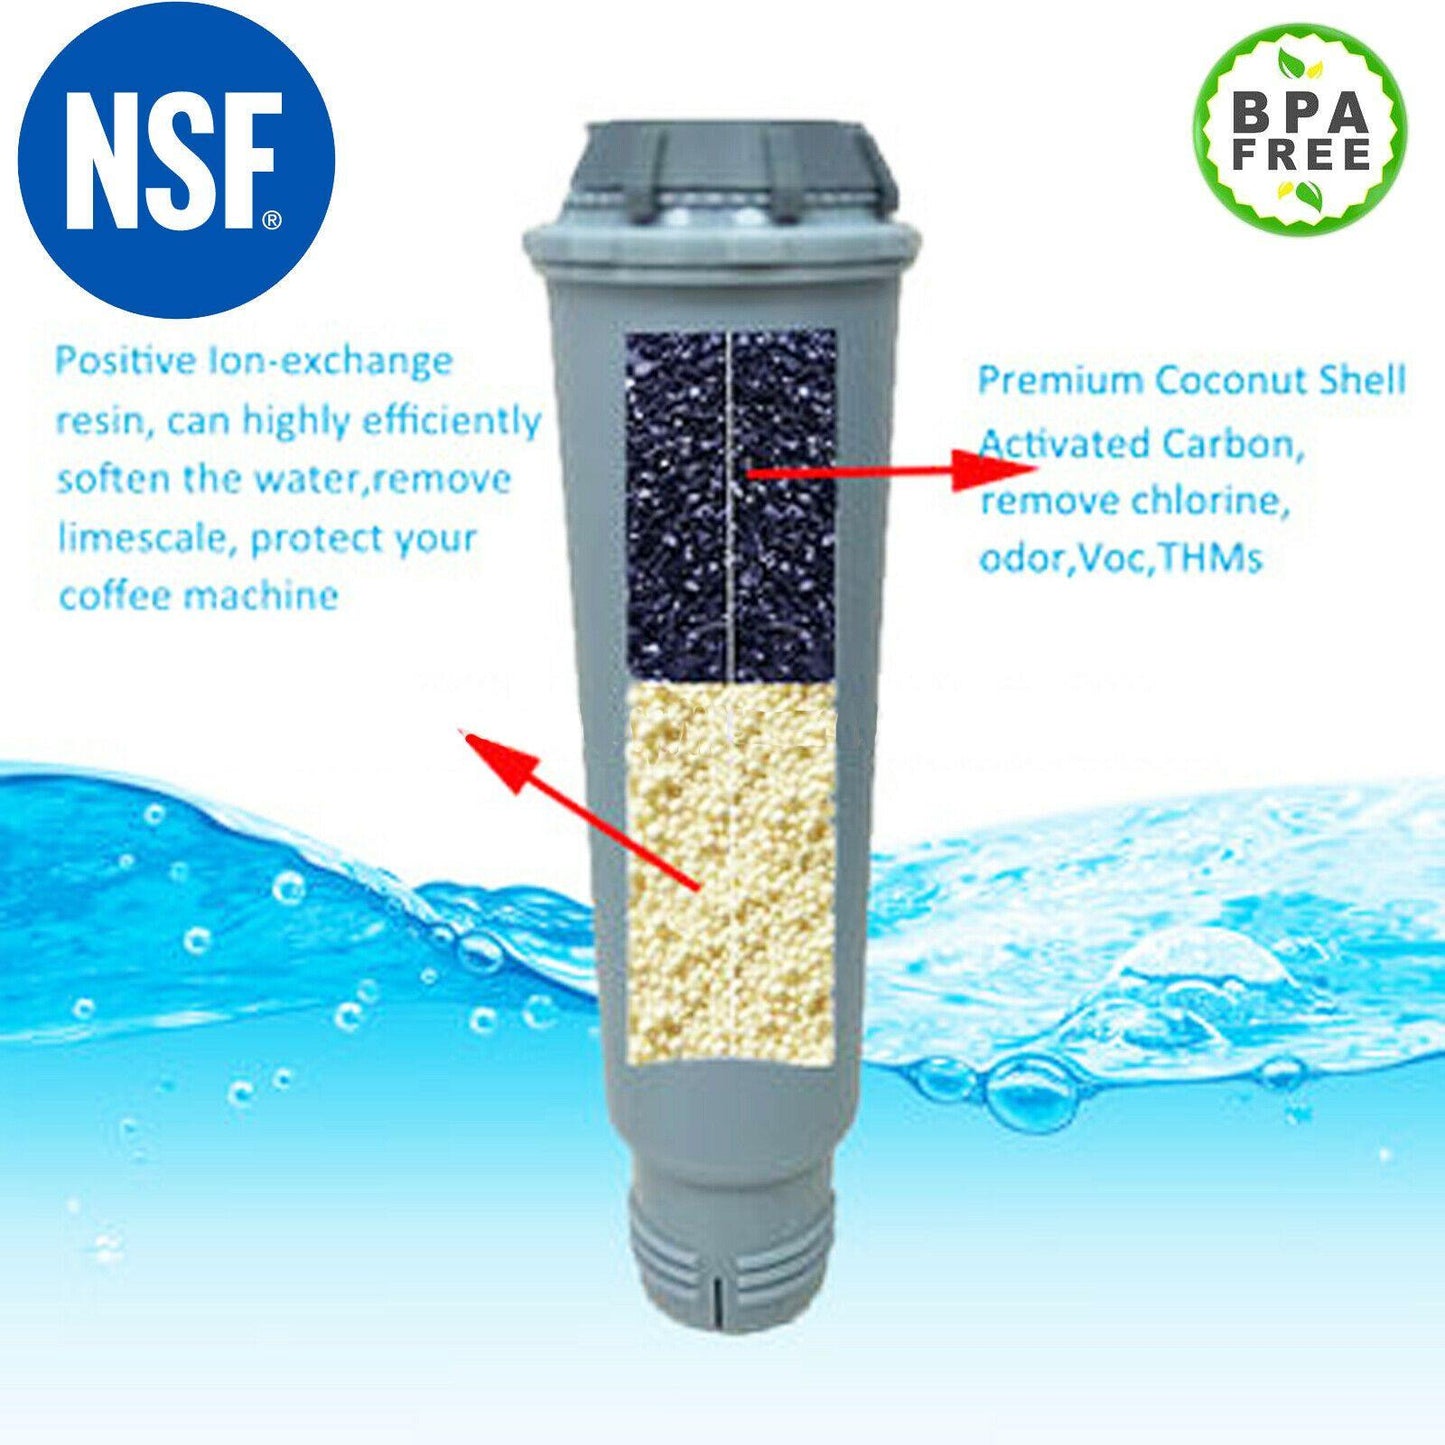 Coffee Machine Water Filter For Bosch Siemens Neff Claris 461732 TCZ6003 TZ60003 Sparesbarn